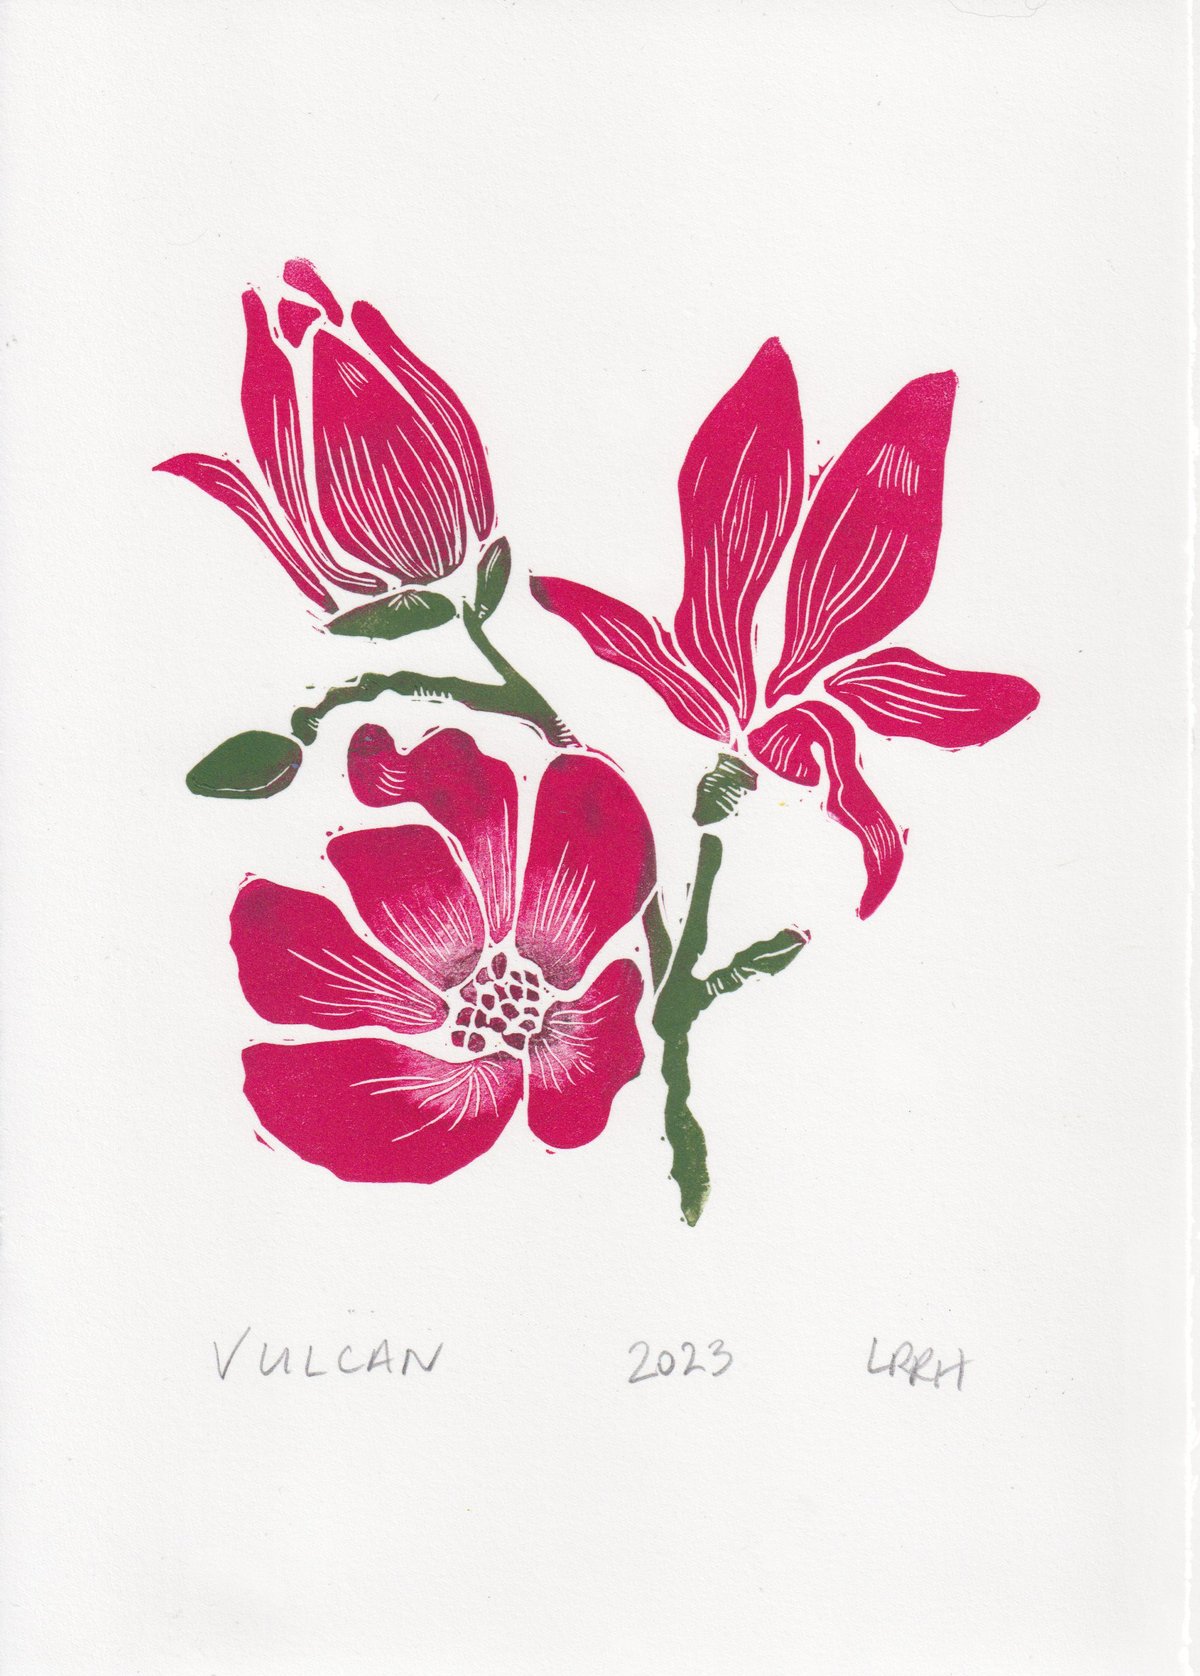 Vulcan - Magnolia Linoprint